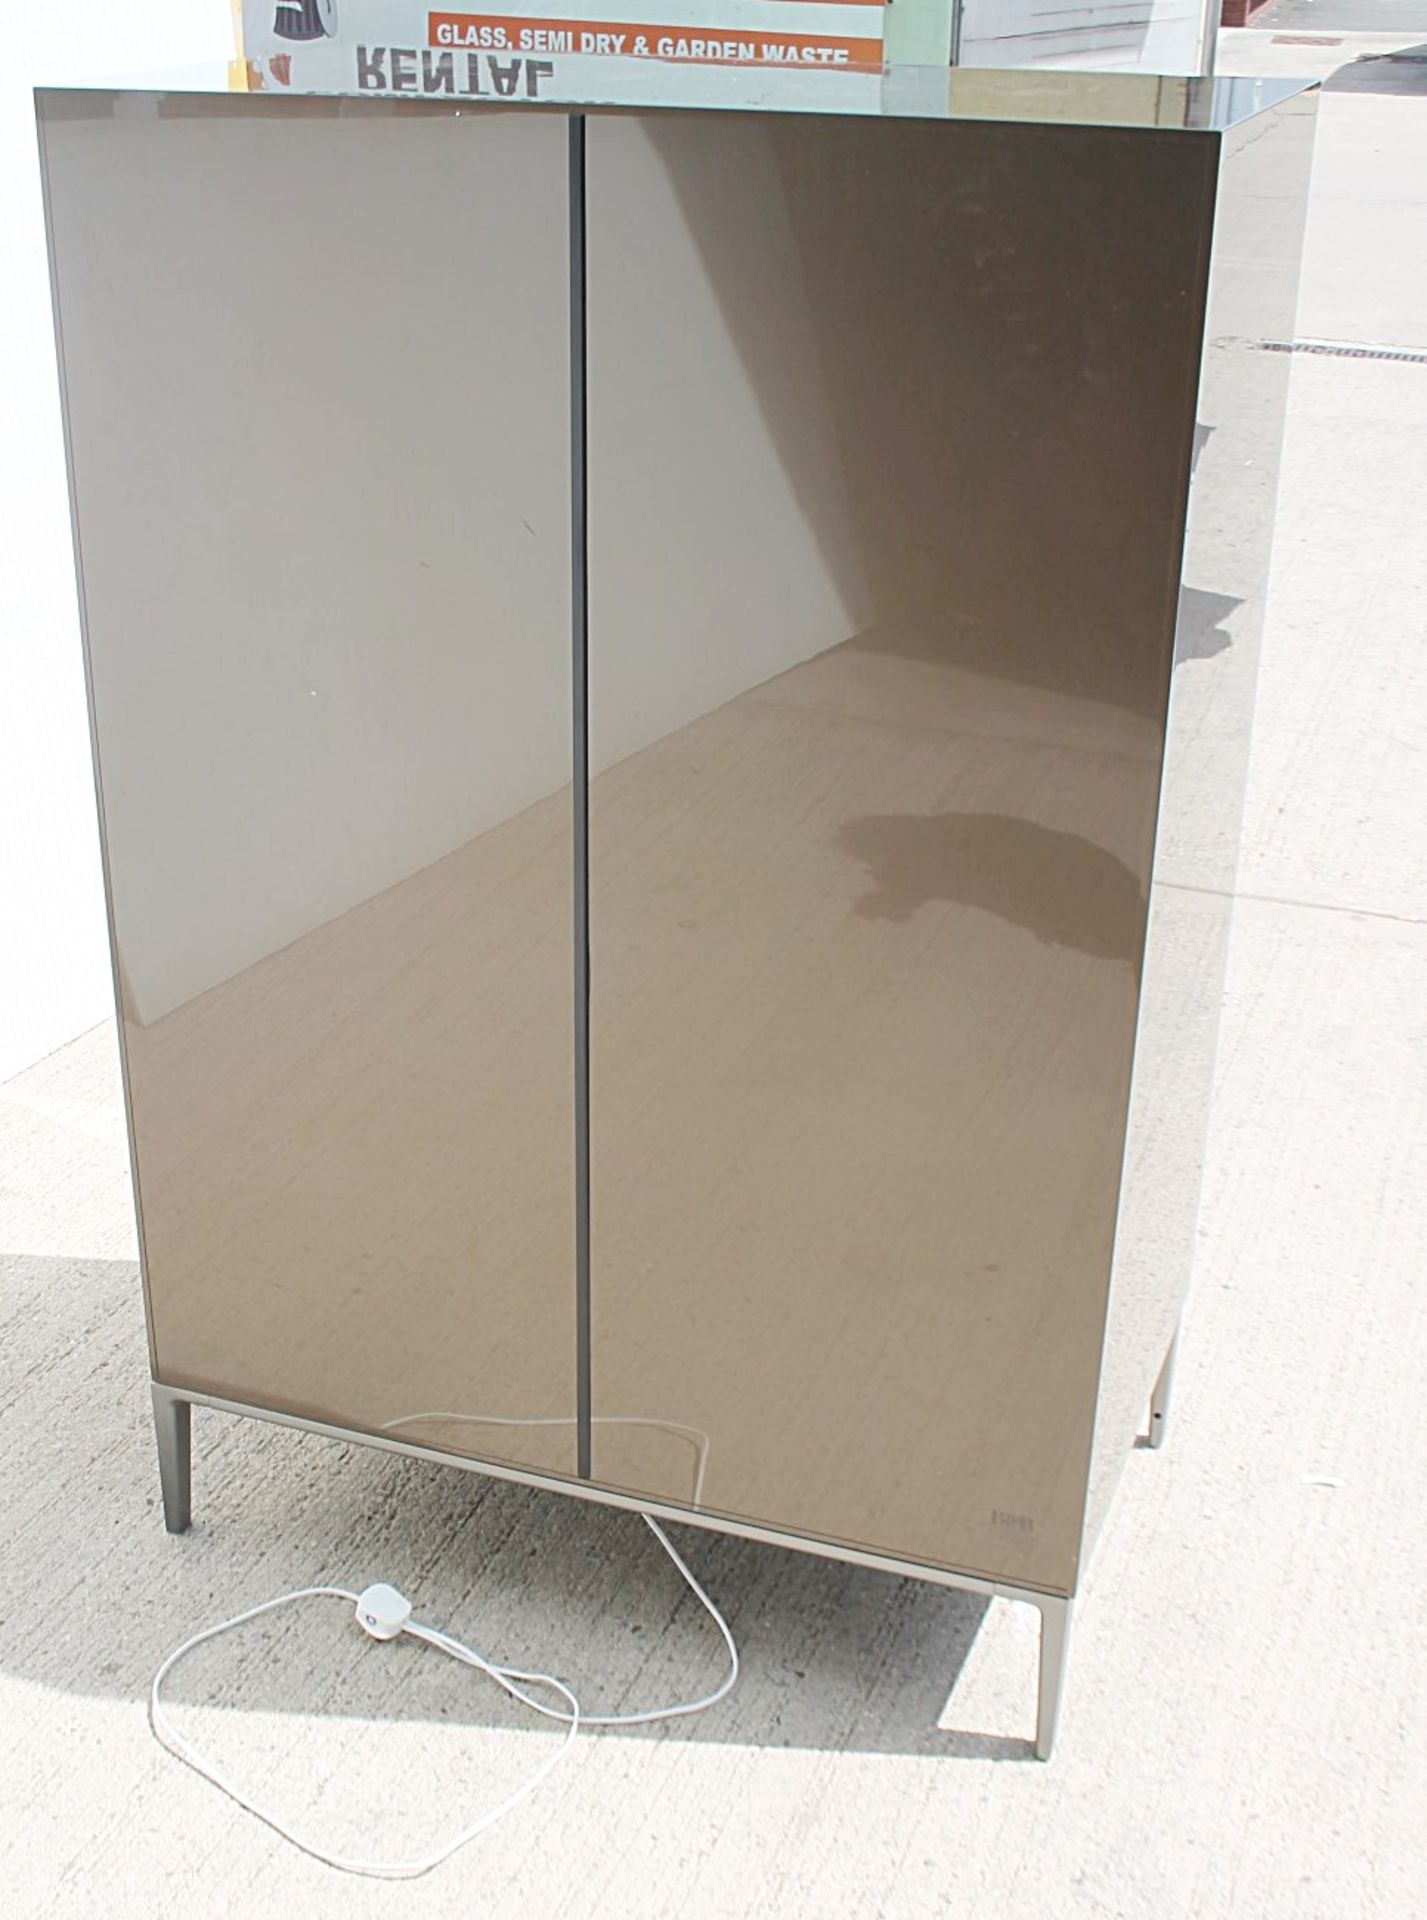 1 x B&B ITALIA 'Eucalipto' Designer 2-Door Illuminated Storage Unit With Bronzed Mirror Fronted - Image 2 of 7